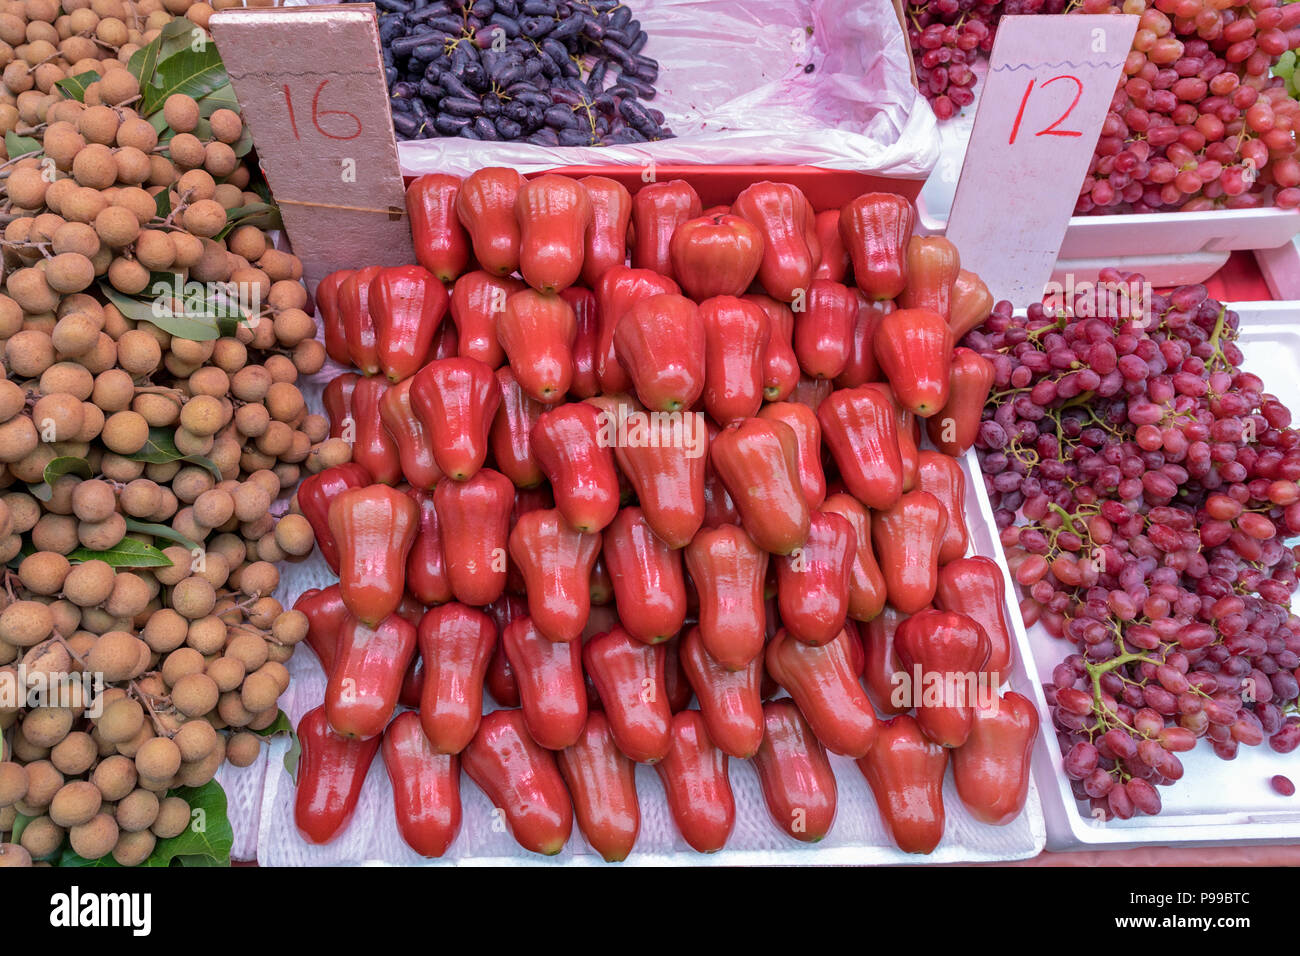 Big Pile of Frsh Rose Apples at Market Stock Photo